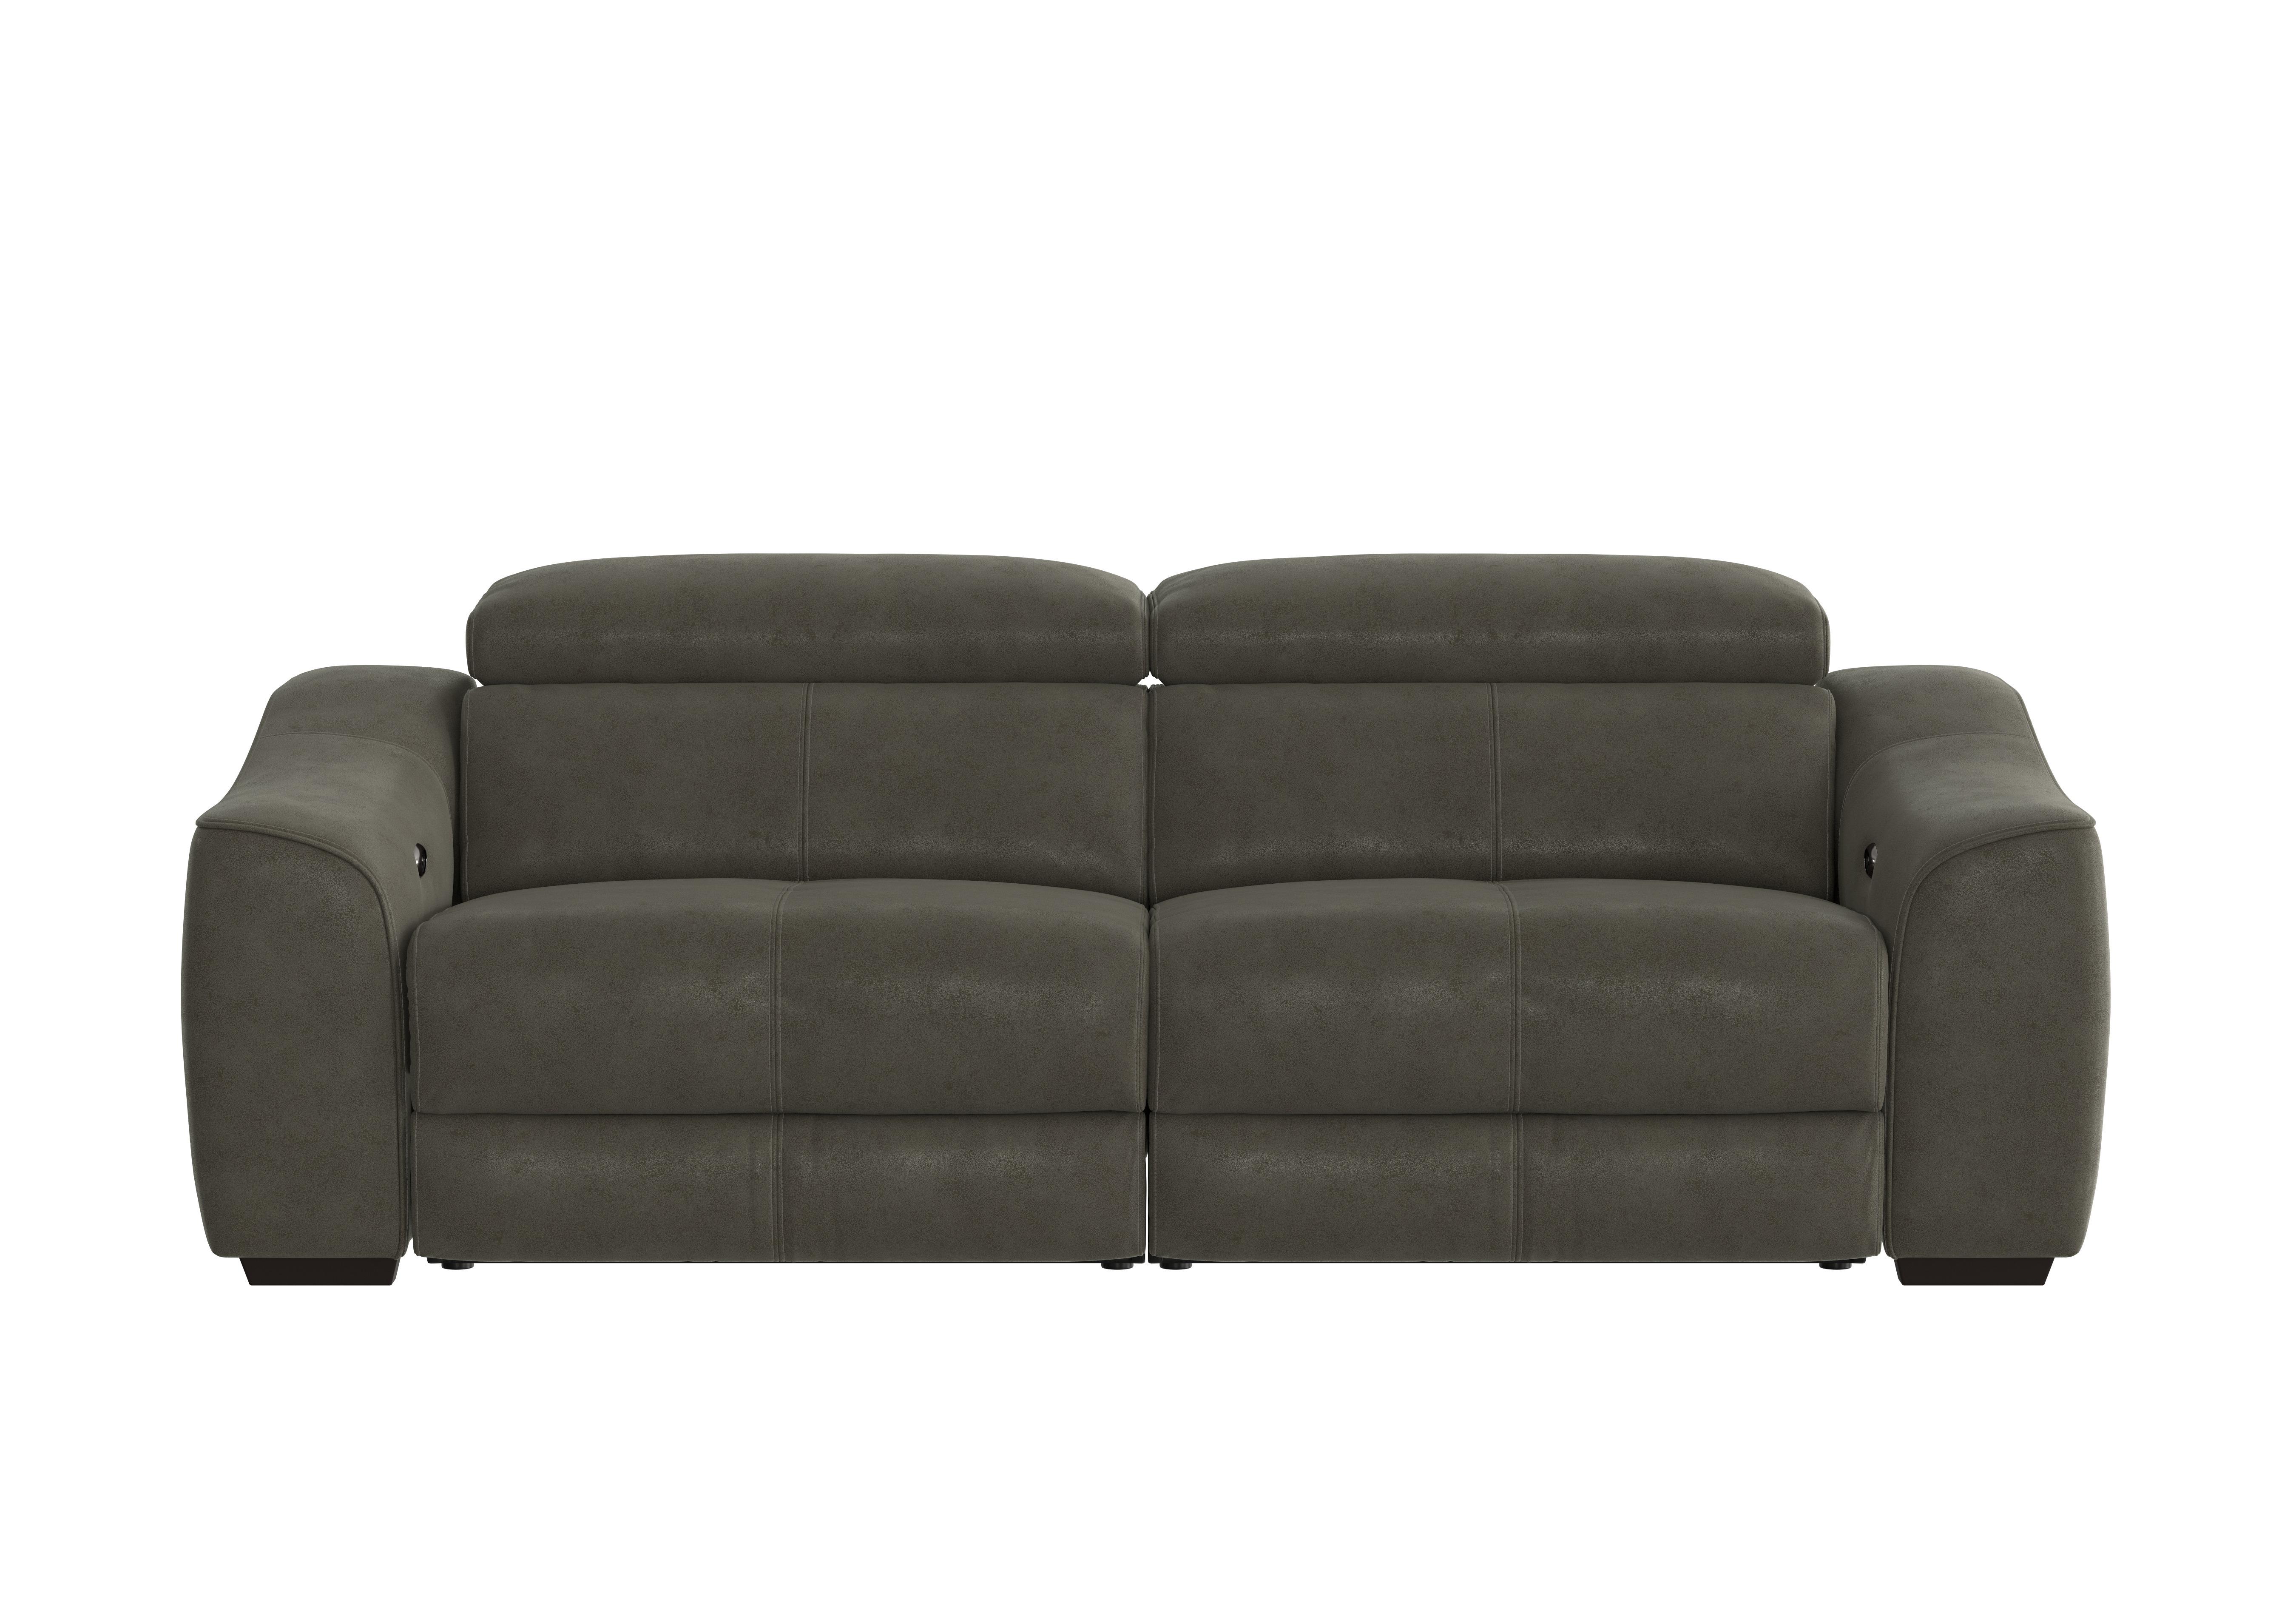 Elixir 3 Seater Fabric Sofa in Bfa-Raf-R16 Charcoal on Furniture Village